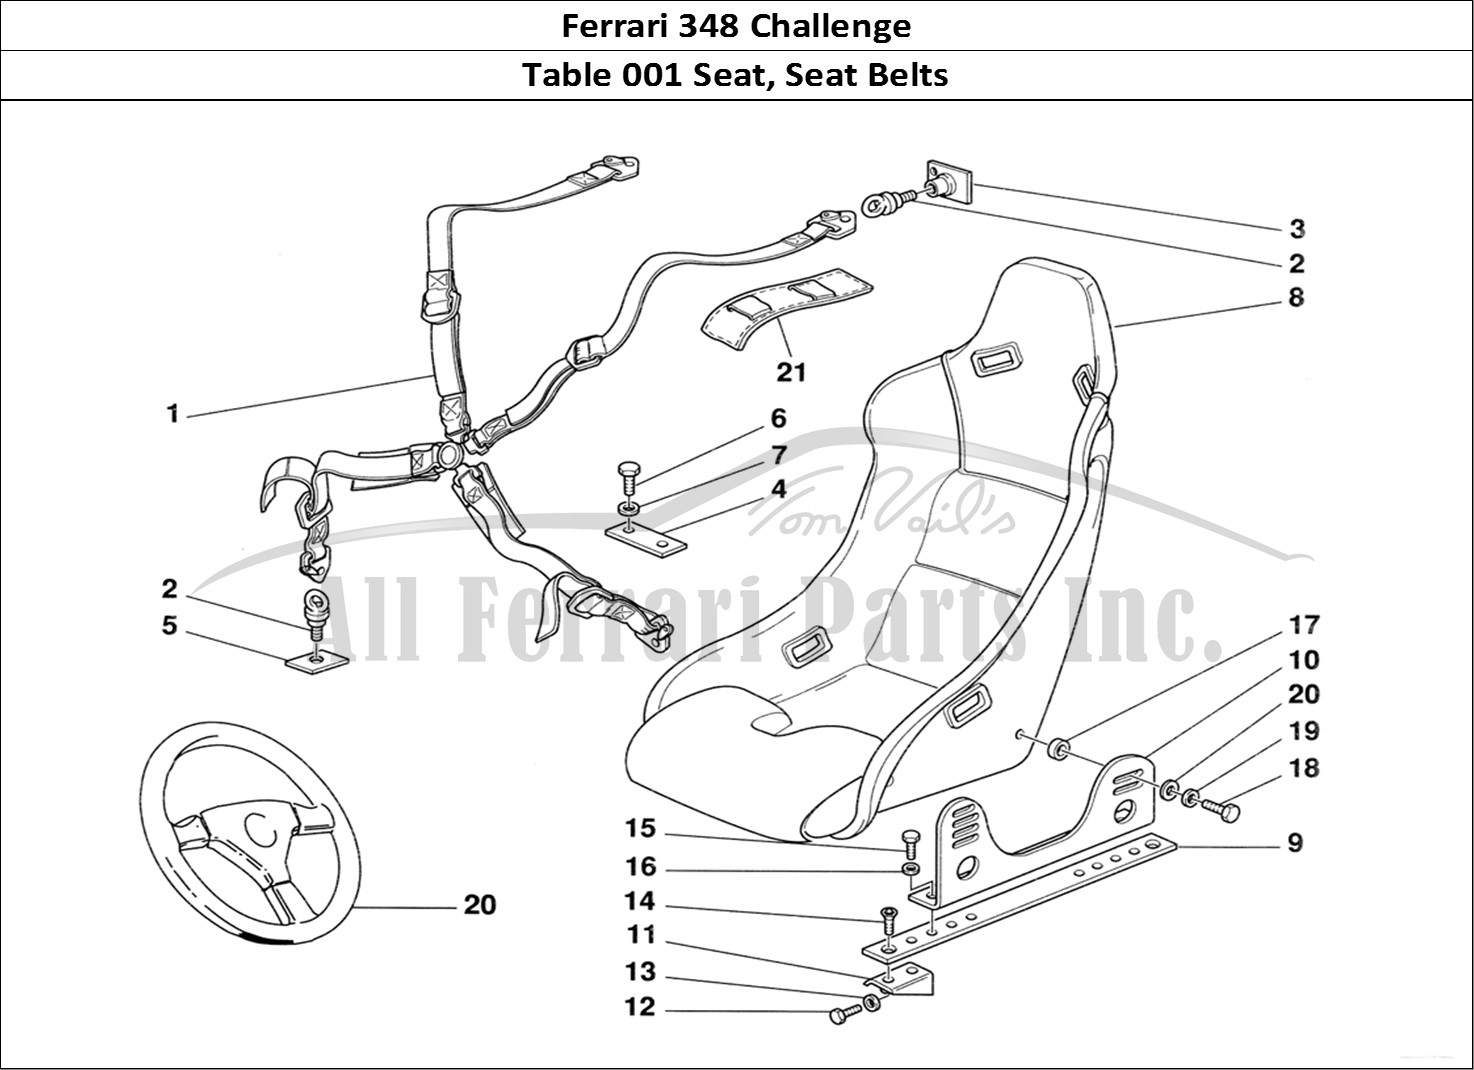 Ferrari Parts Ferrari 348 Challenge (1995) Page 001 Seat Safety Belts and Sea